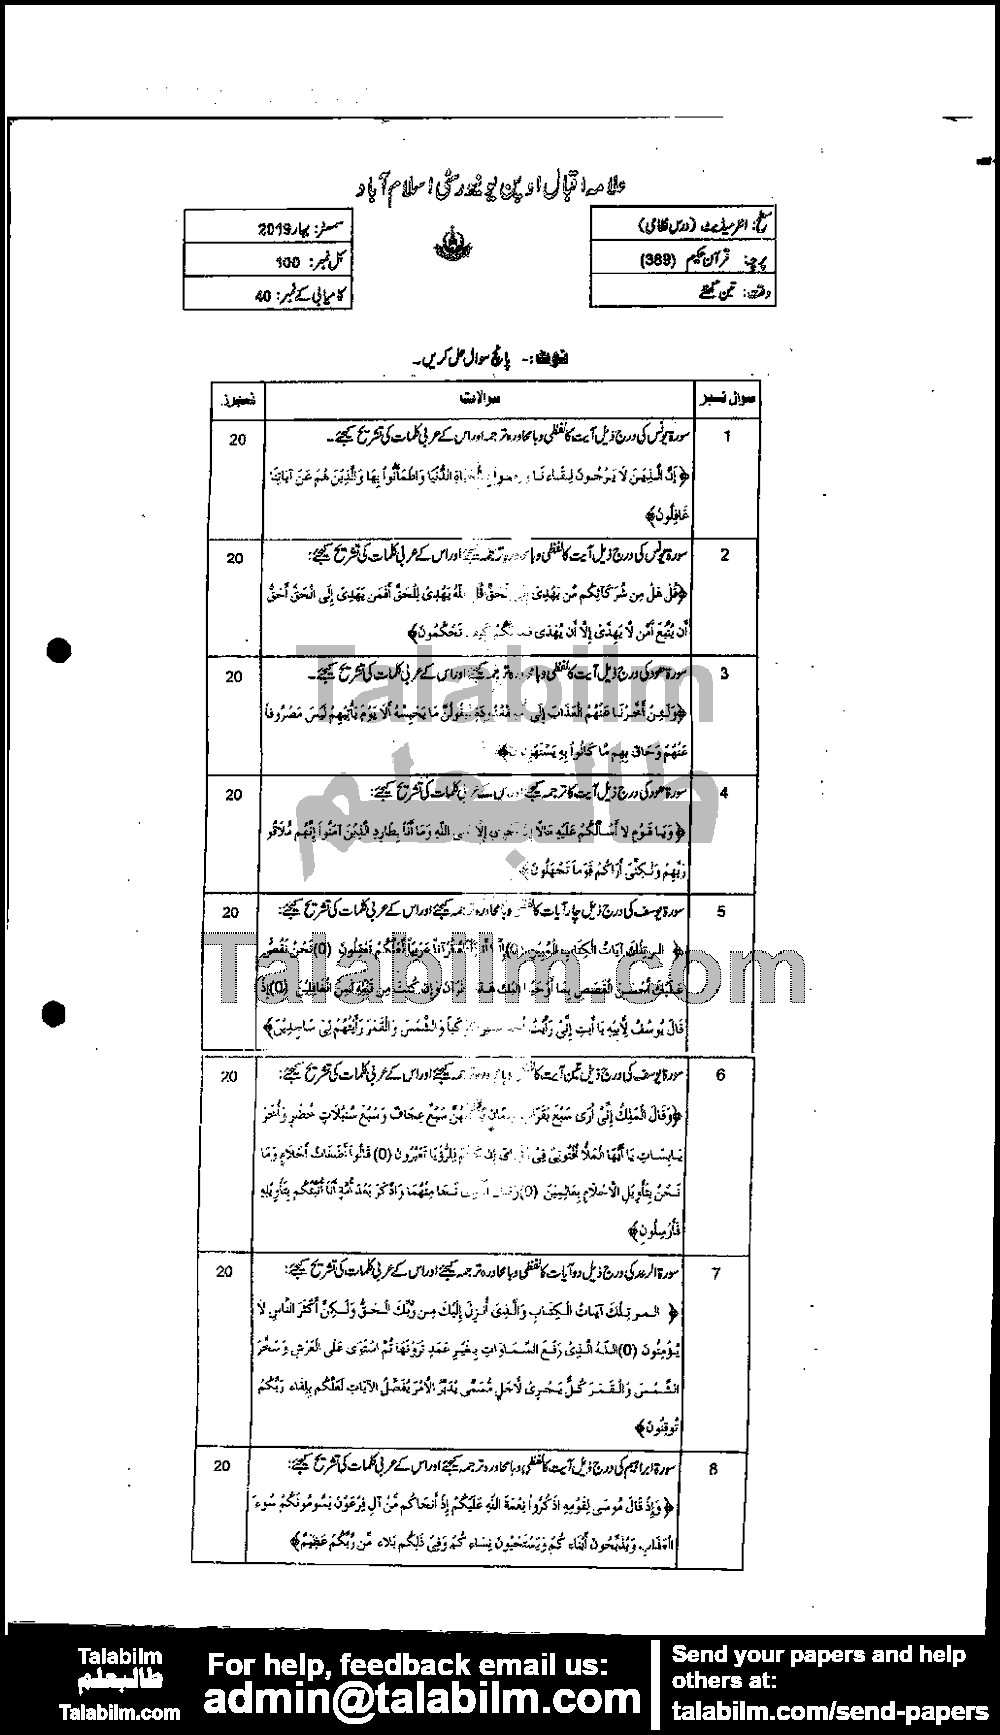 Quran-e-Hakeem 389 past paper for Spring 2019